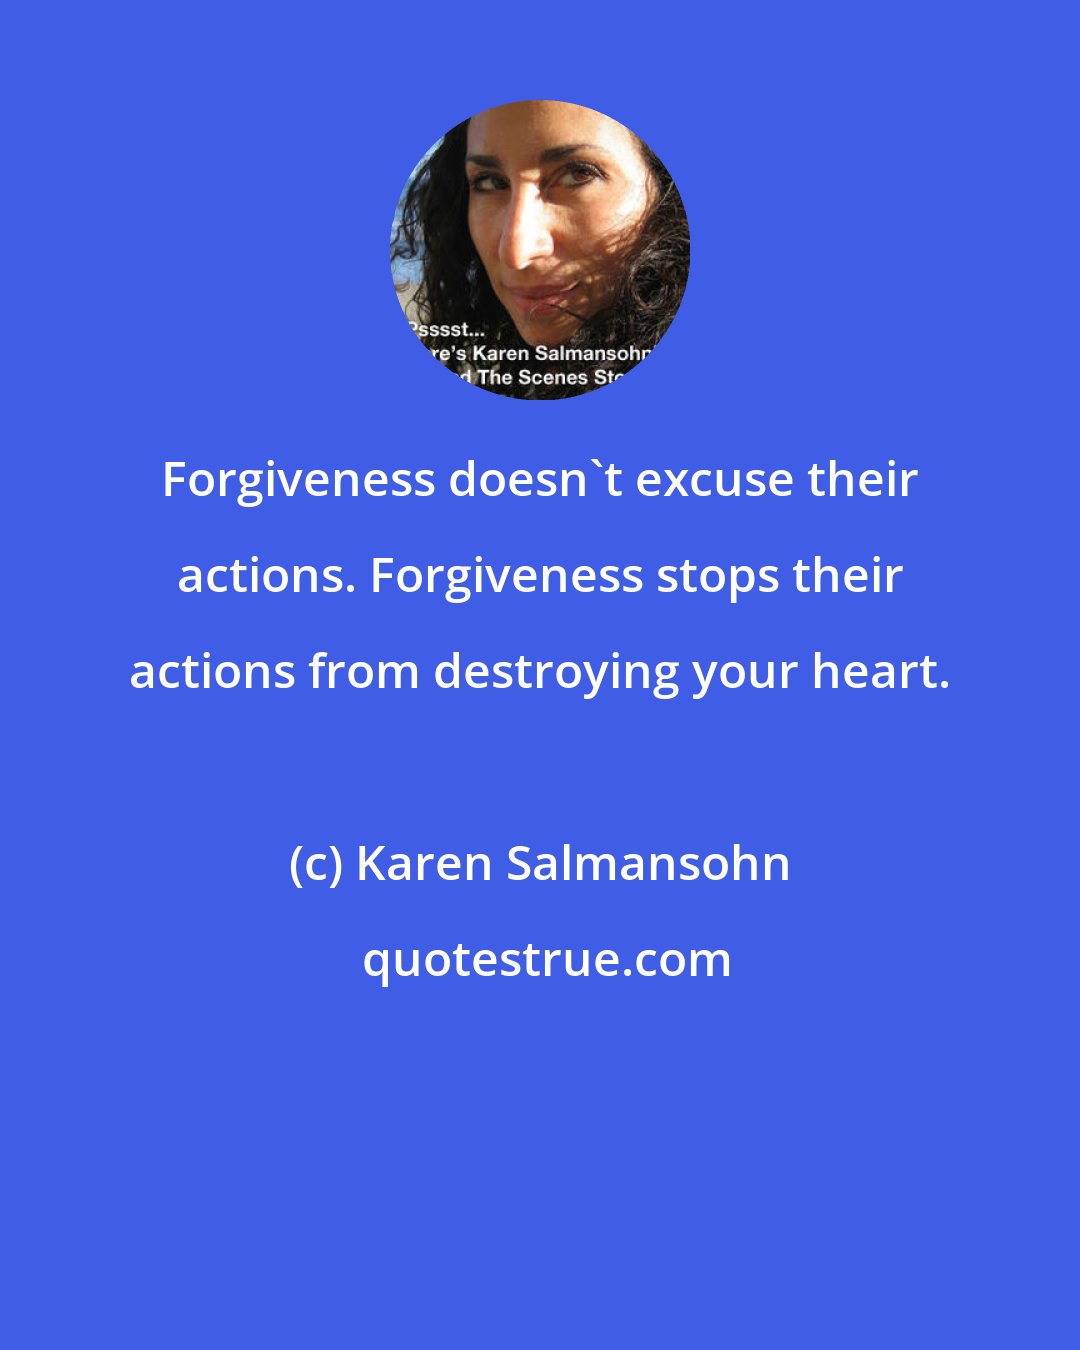 Karen Salmansohn: Forgiveness doesn't excuse their actions. Forgiveness stops their actions from destroying your heart.